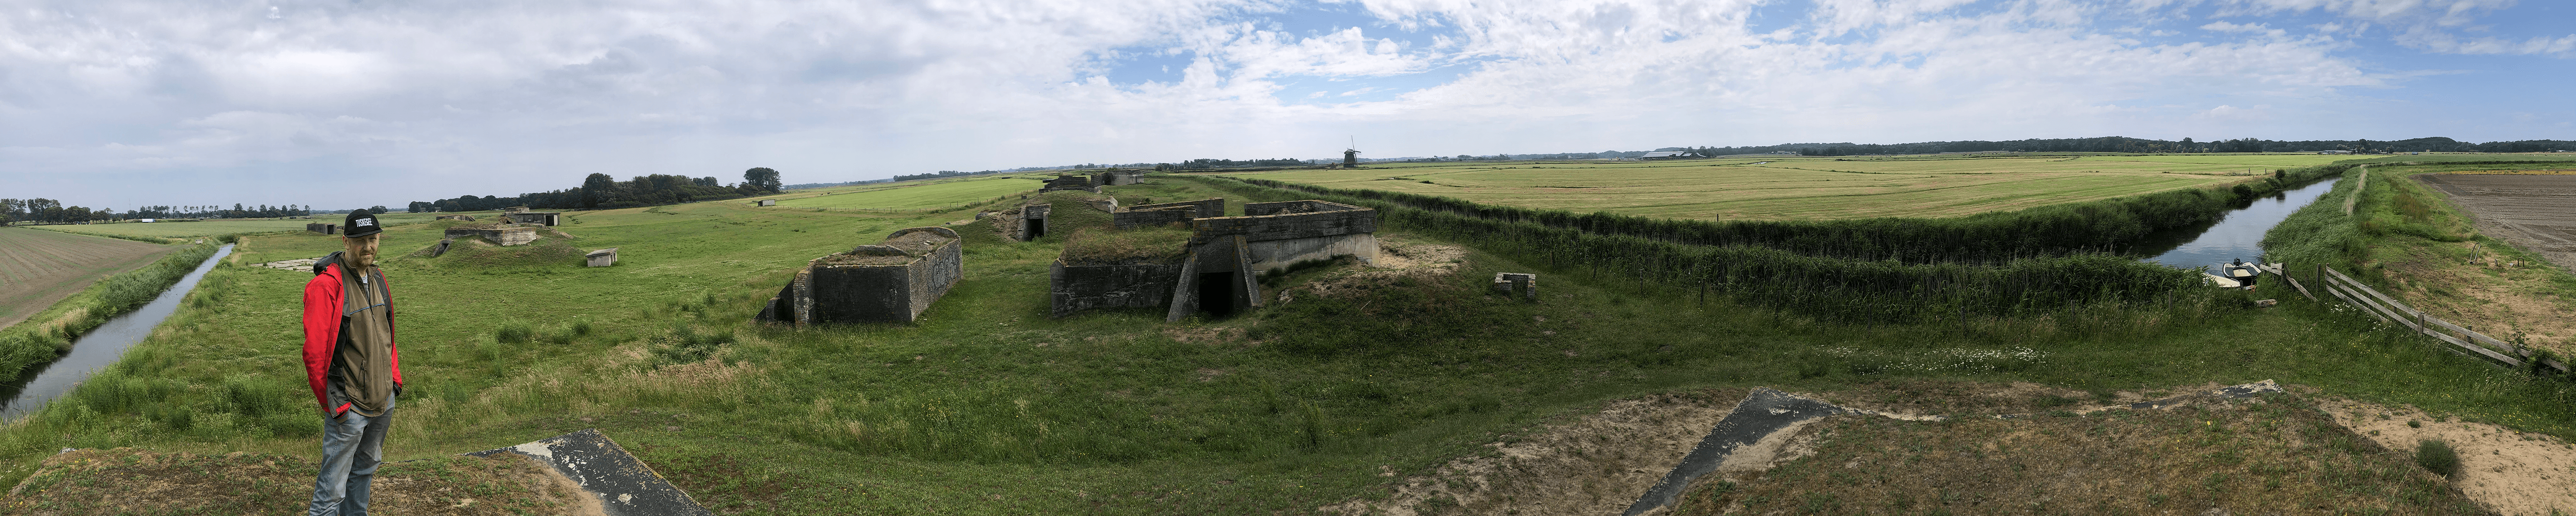 Bunkerdorp